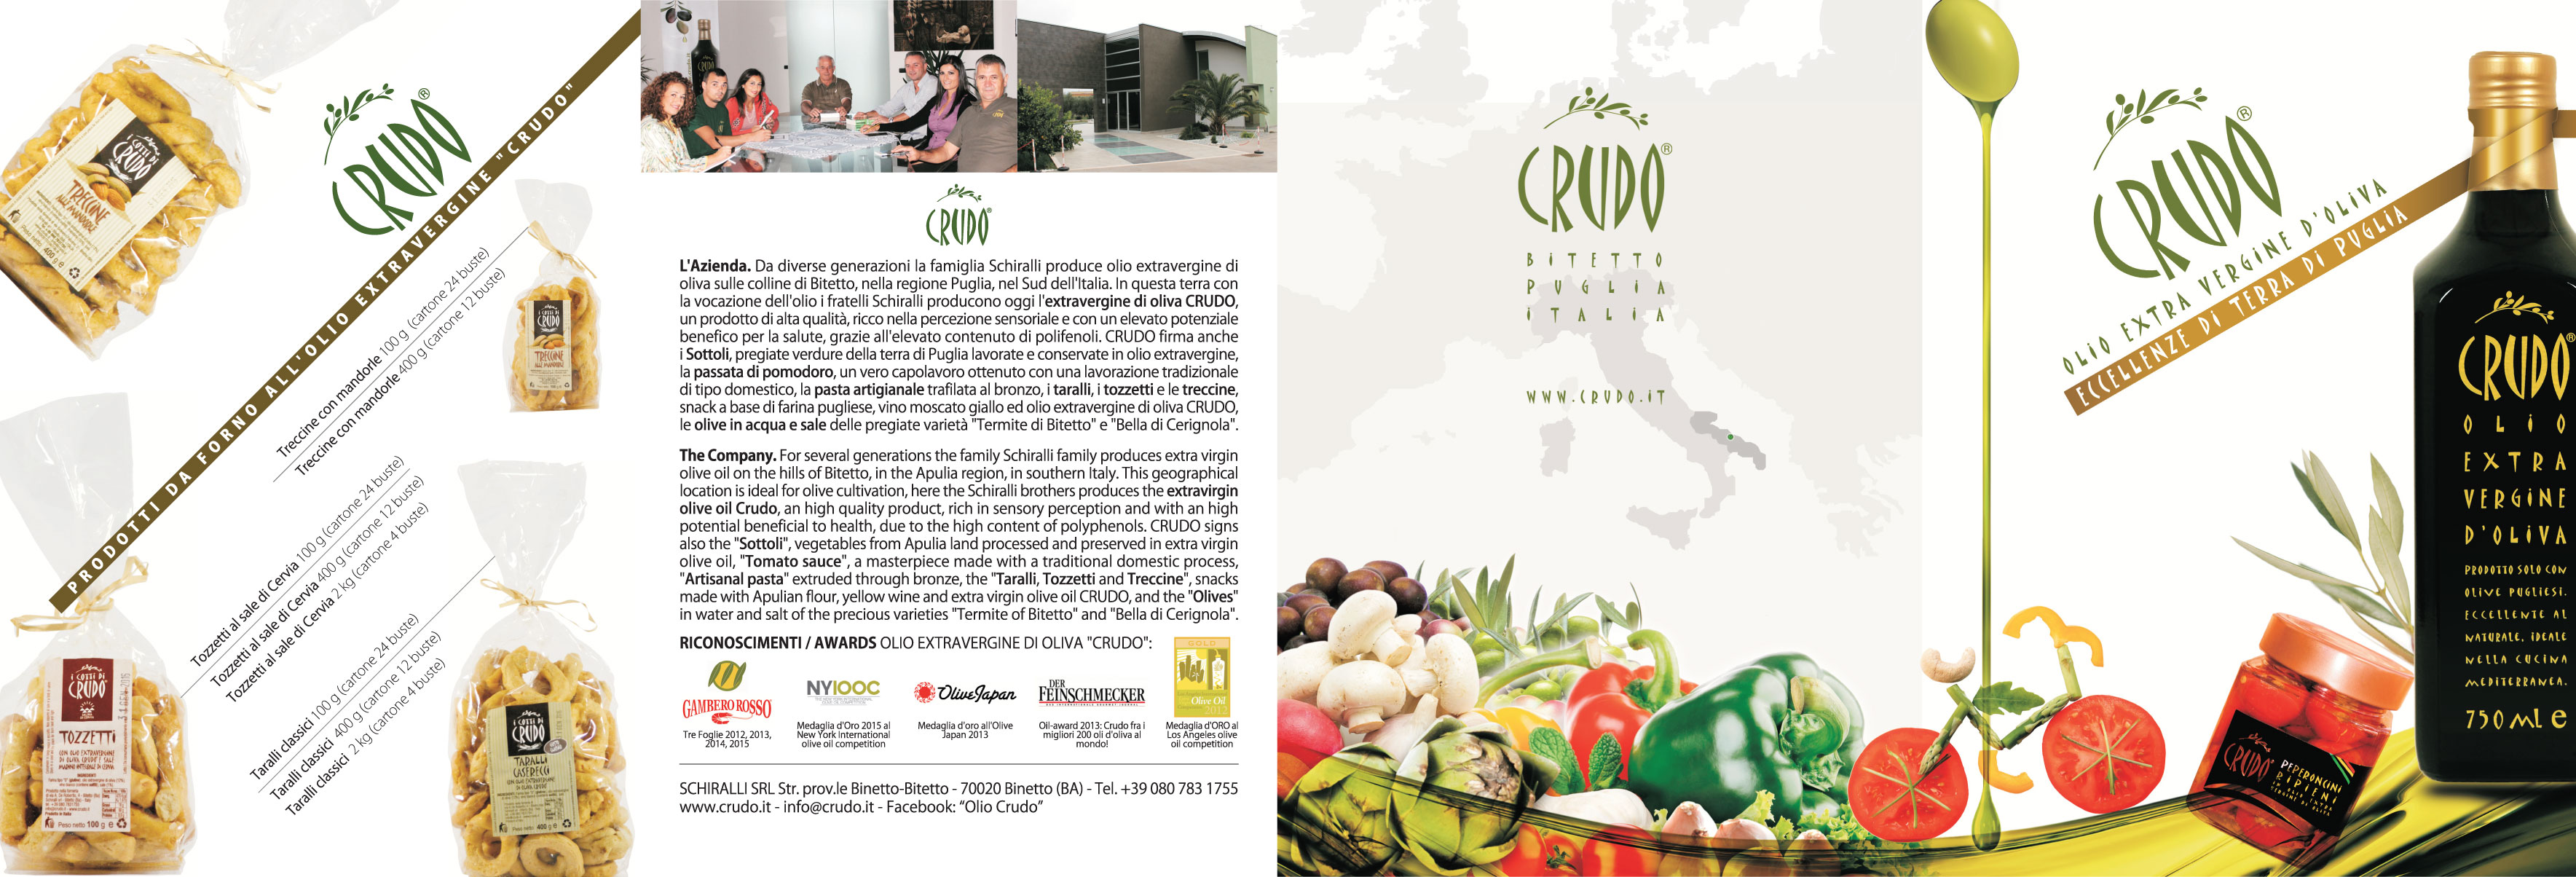 crudo-brochure2